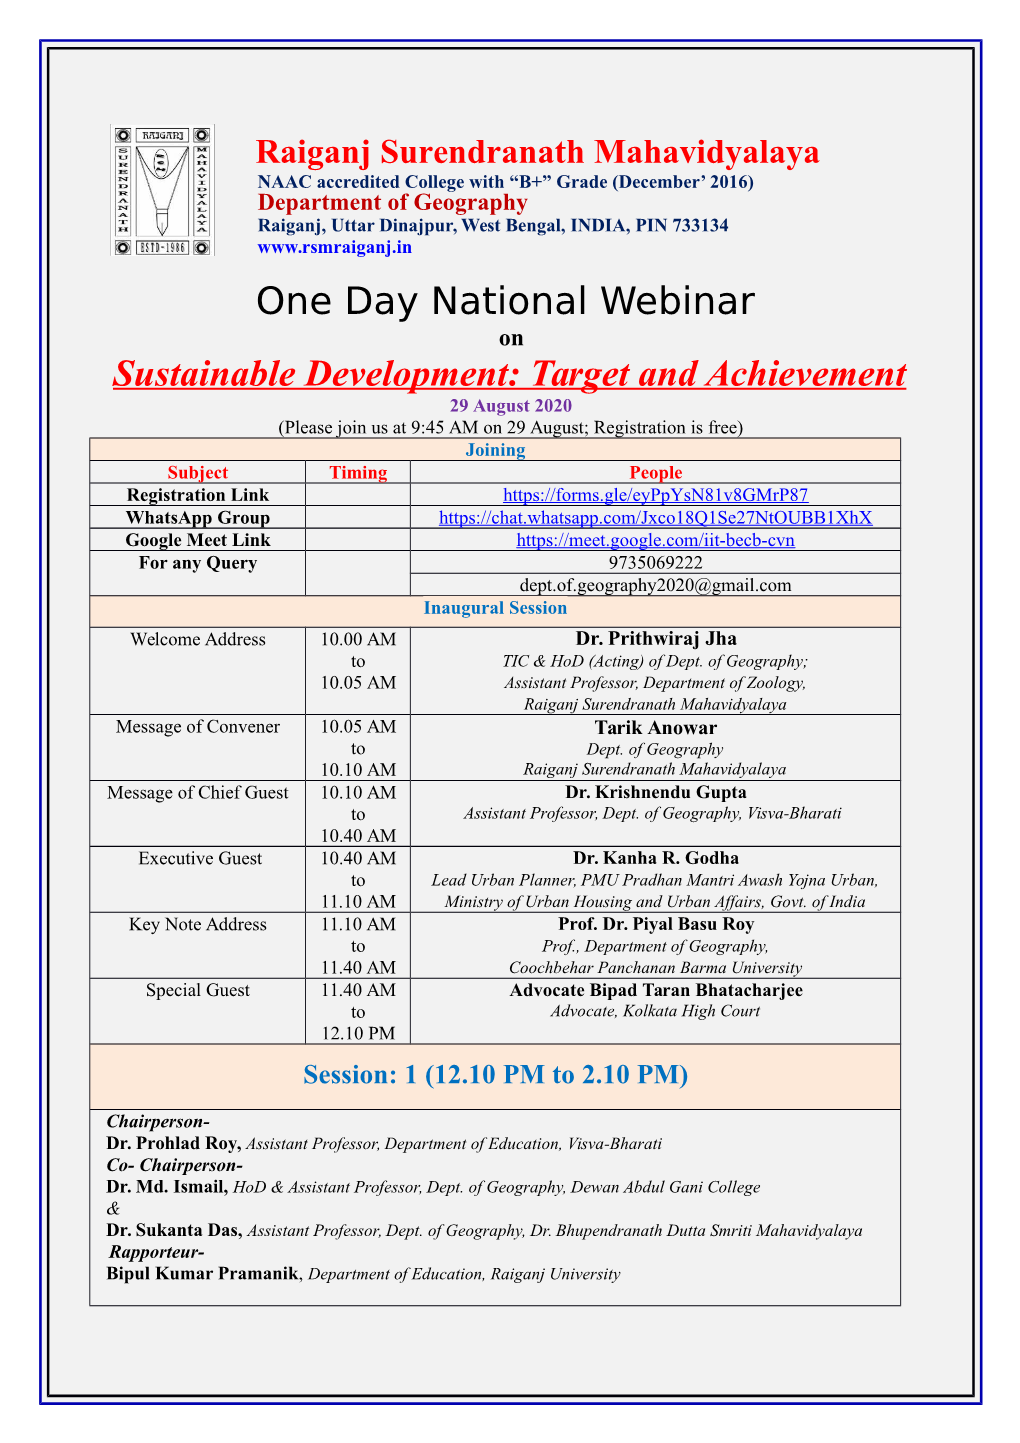 One Day National Webinar Sustainable Development